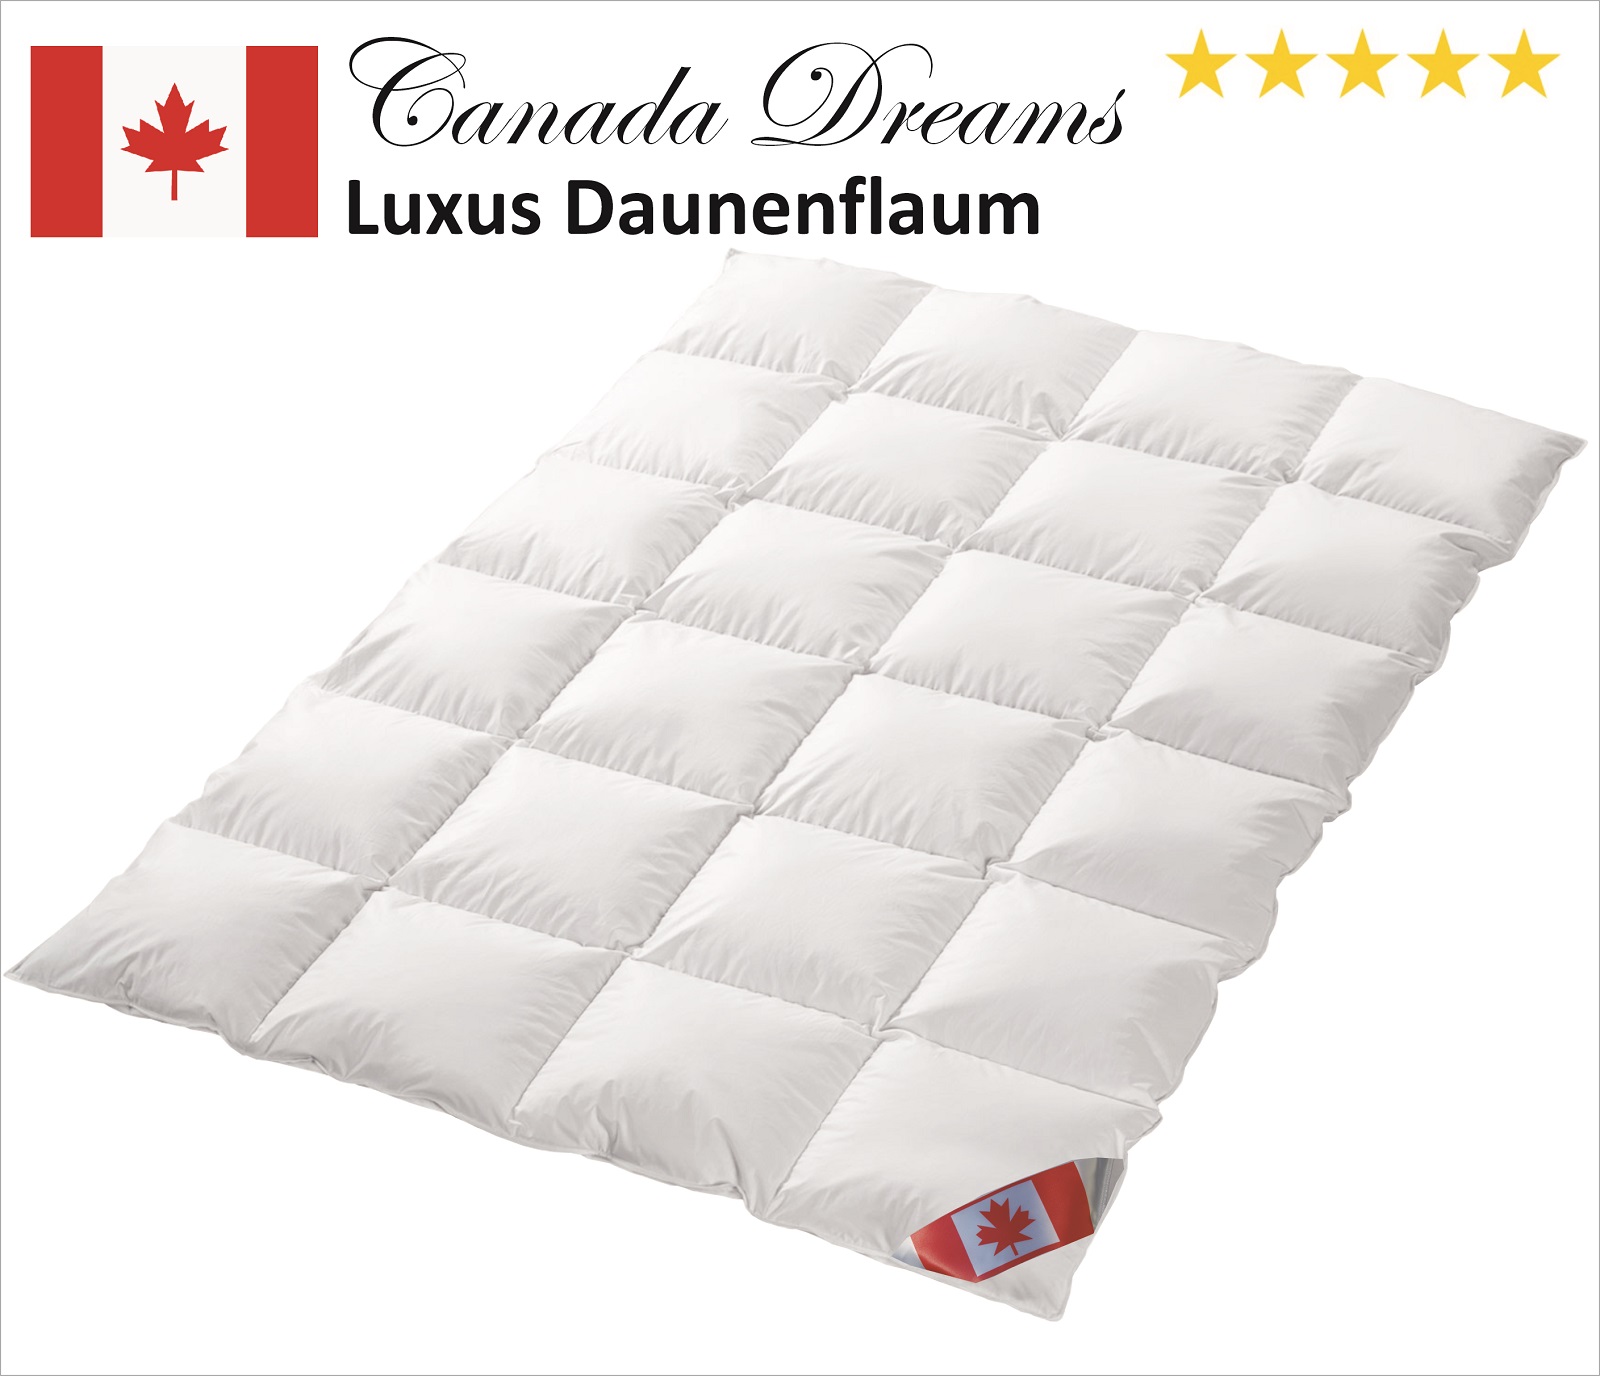 Canada Dreams Luxus Übergangs Daunendecke Daunenflaum CD 2 220x240 cm